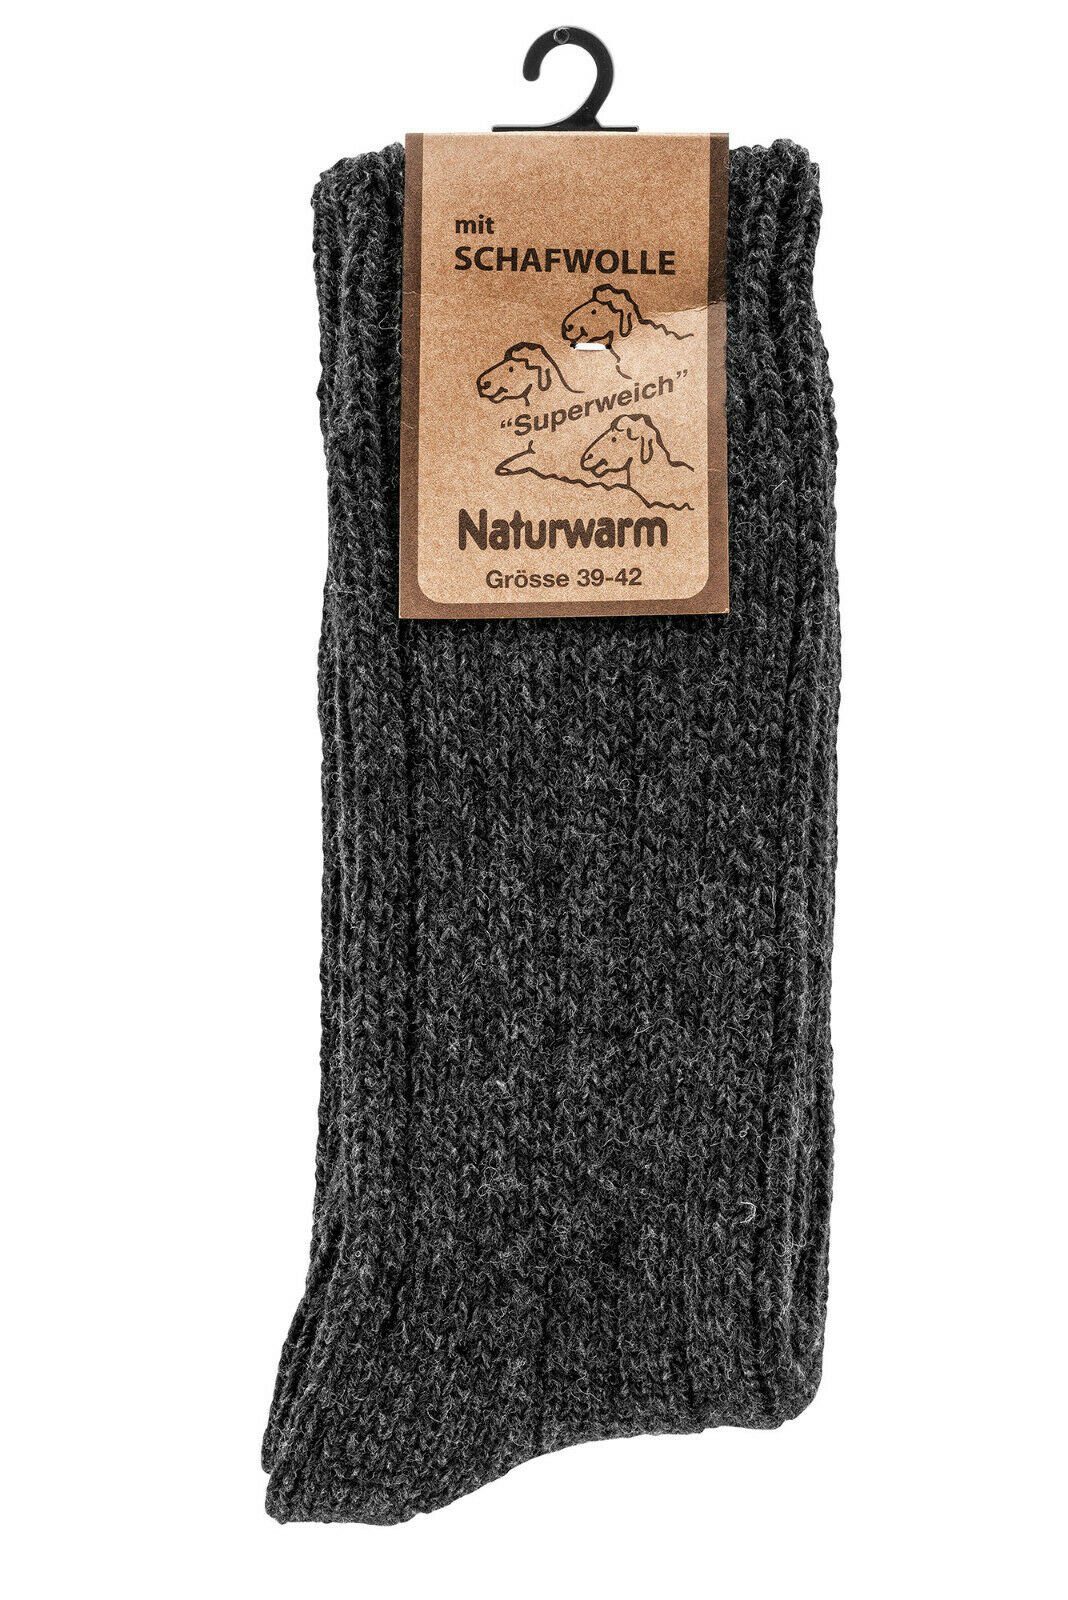 Socken Wowerat Norwegersocken Viskose (3 weiche Paar) Warme Baumwolle mit Norweger Wolle